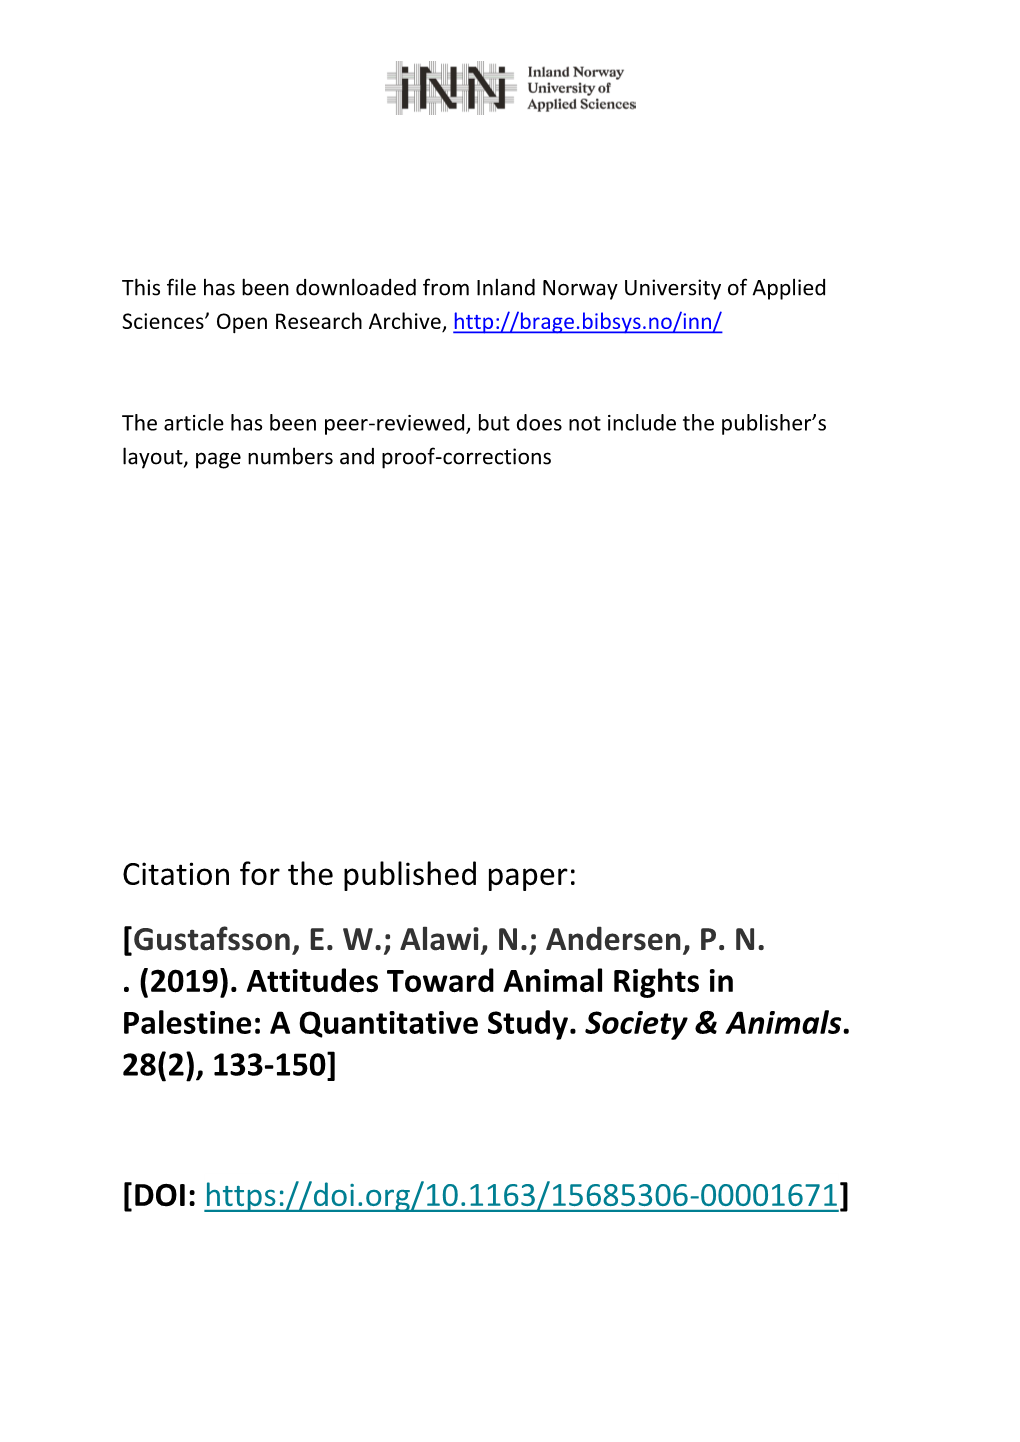 Gustafsson, EW; Alawi, N.; Andersen, PN . (2019). Attitudes Toward Animal Rights In